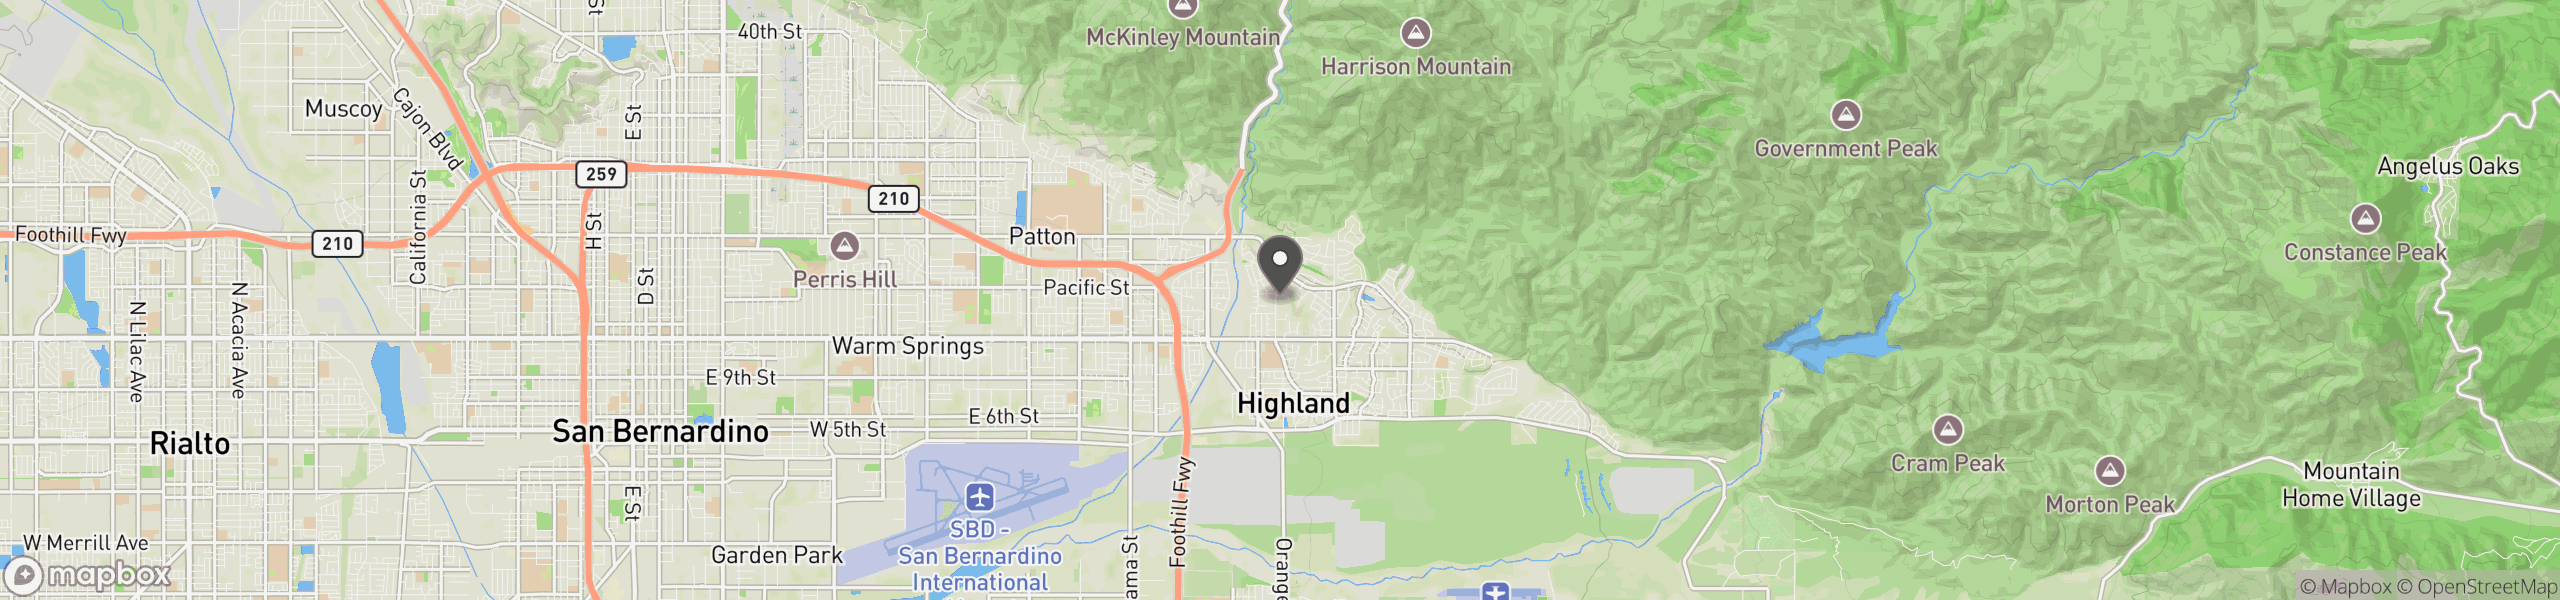 Highland, CA 92346